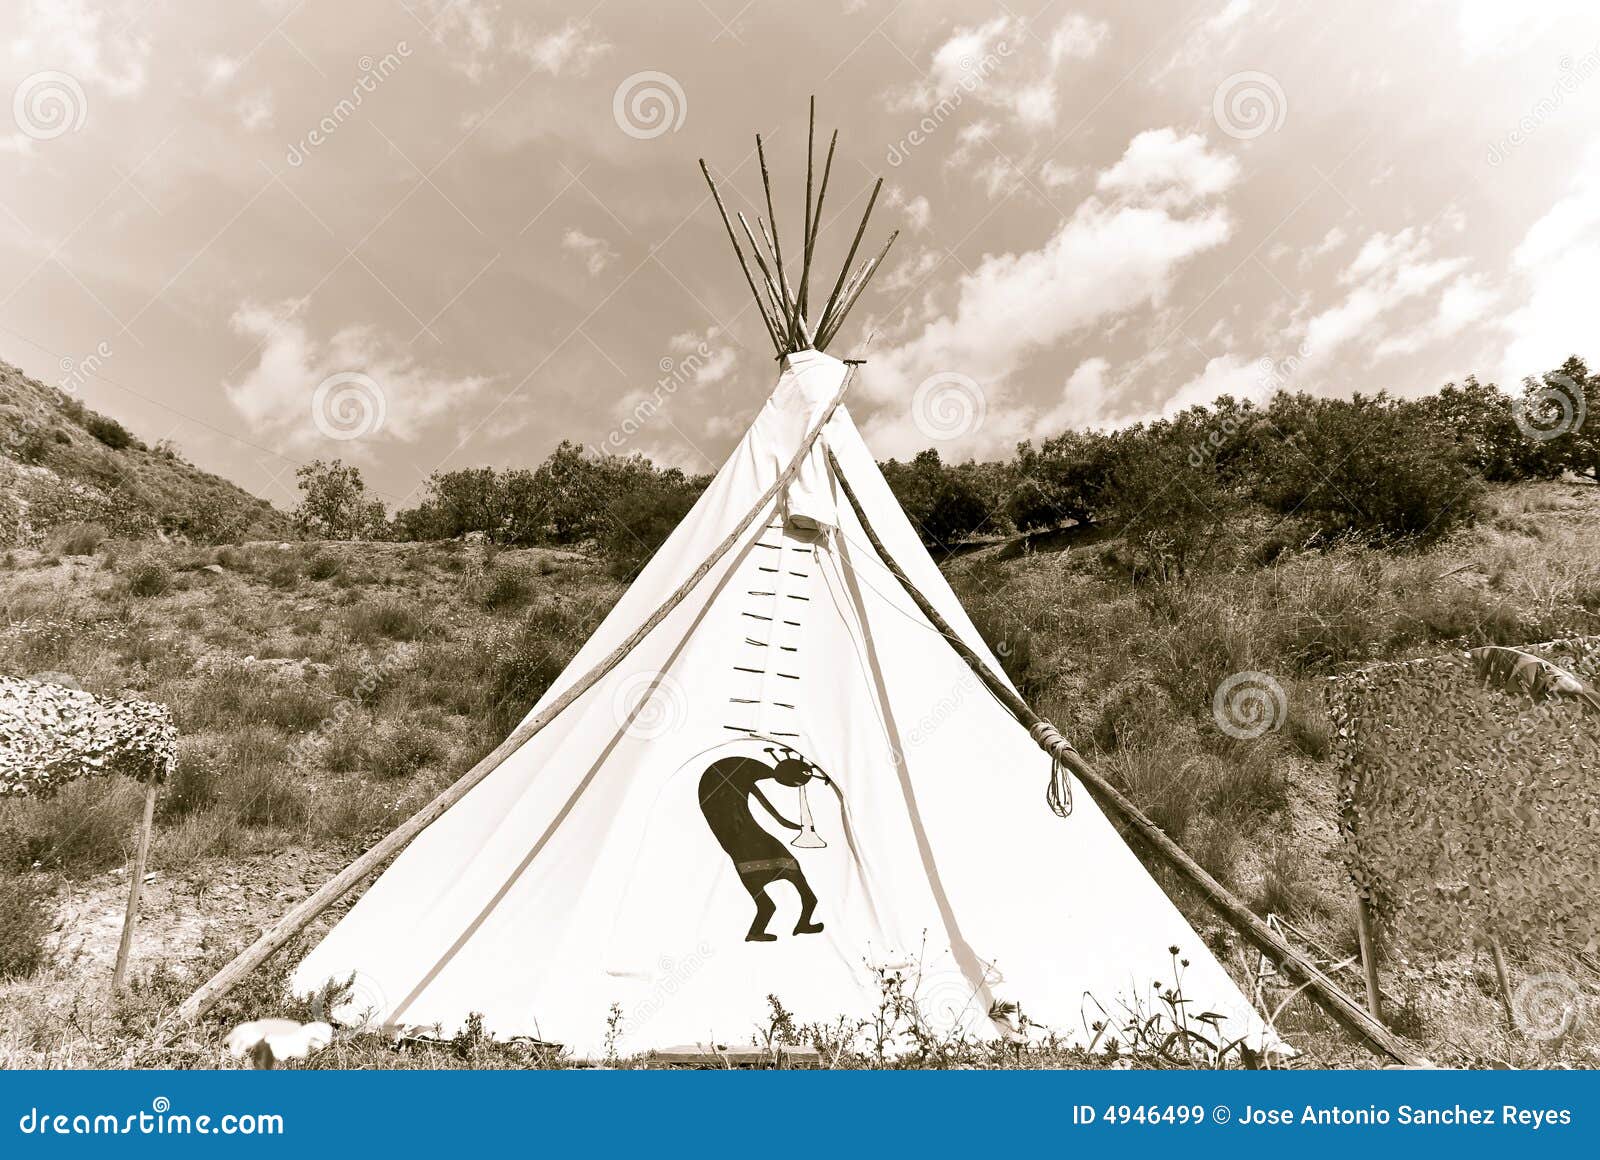 native american teepee